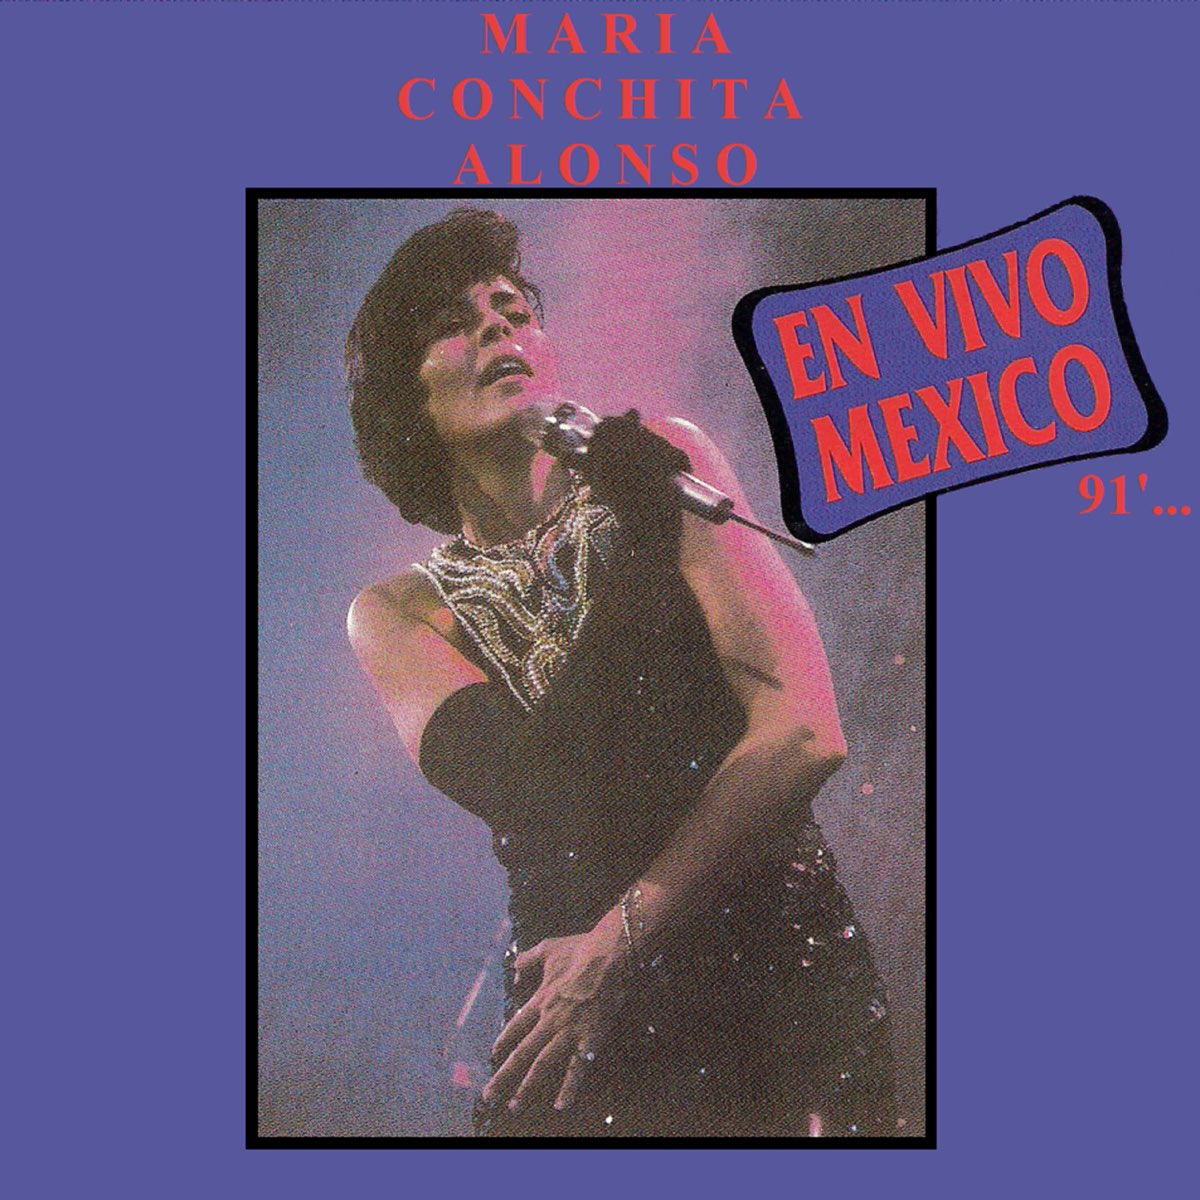 ‎En Vivo México 91' (En Vivo) by Maria Conchita Alonso on Apple Music